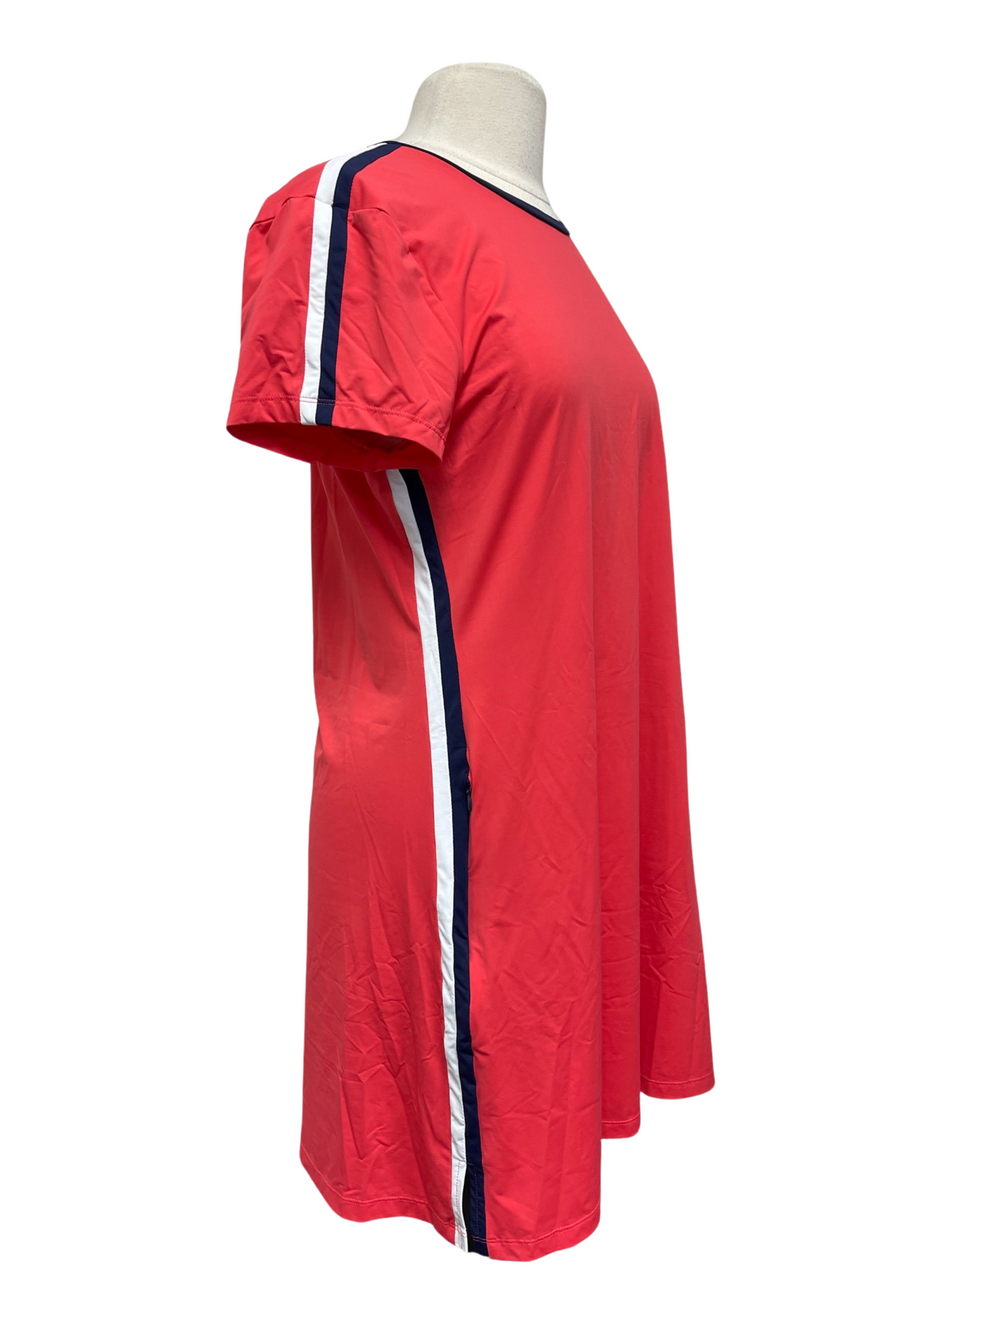 Kinona Golf Dress - Tomato Red - Size Large - Skorzie